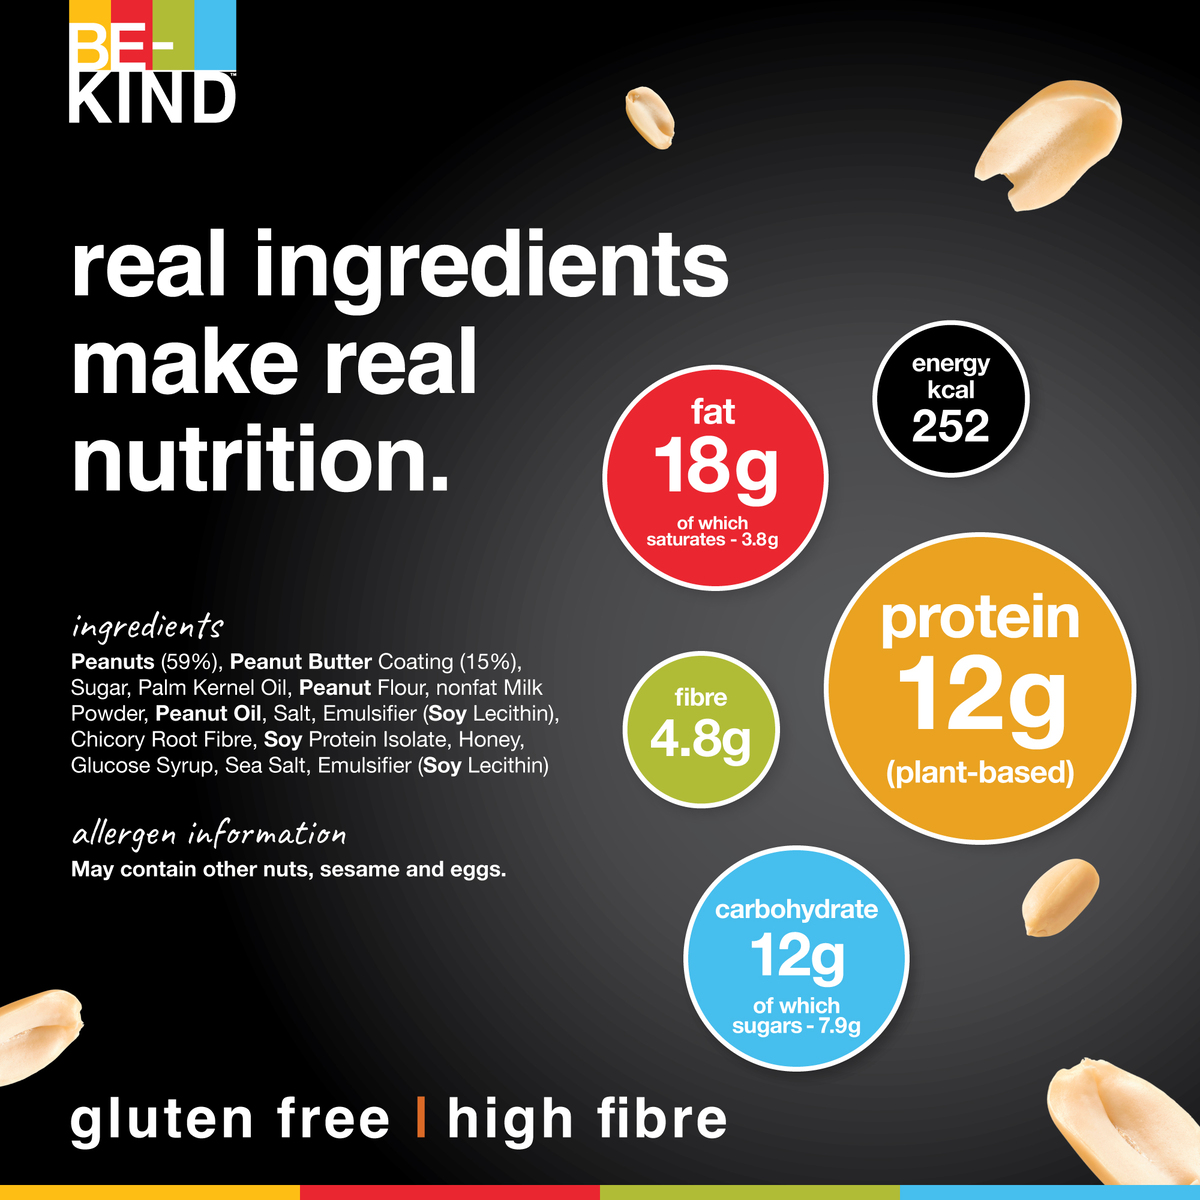 Be-Kind Crunchy Peanut Butter Protein Bar 12 x 50 g